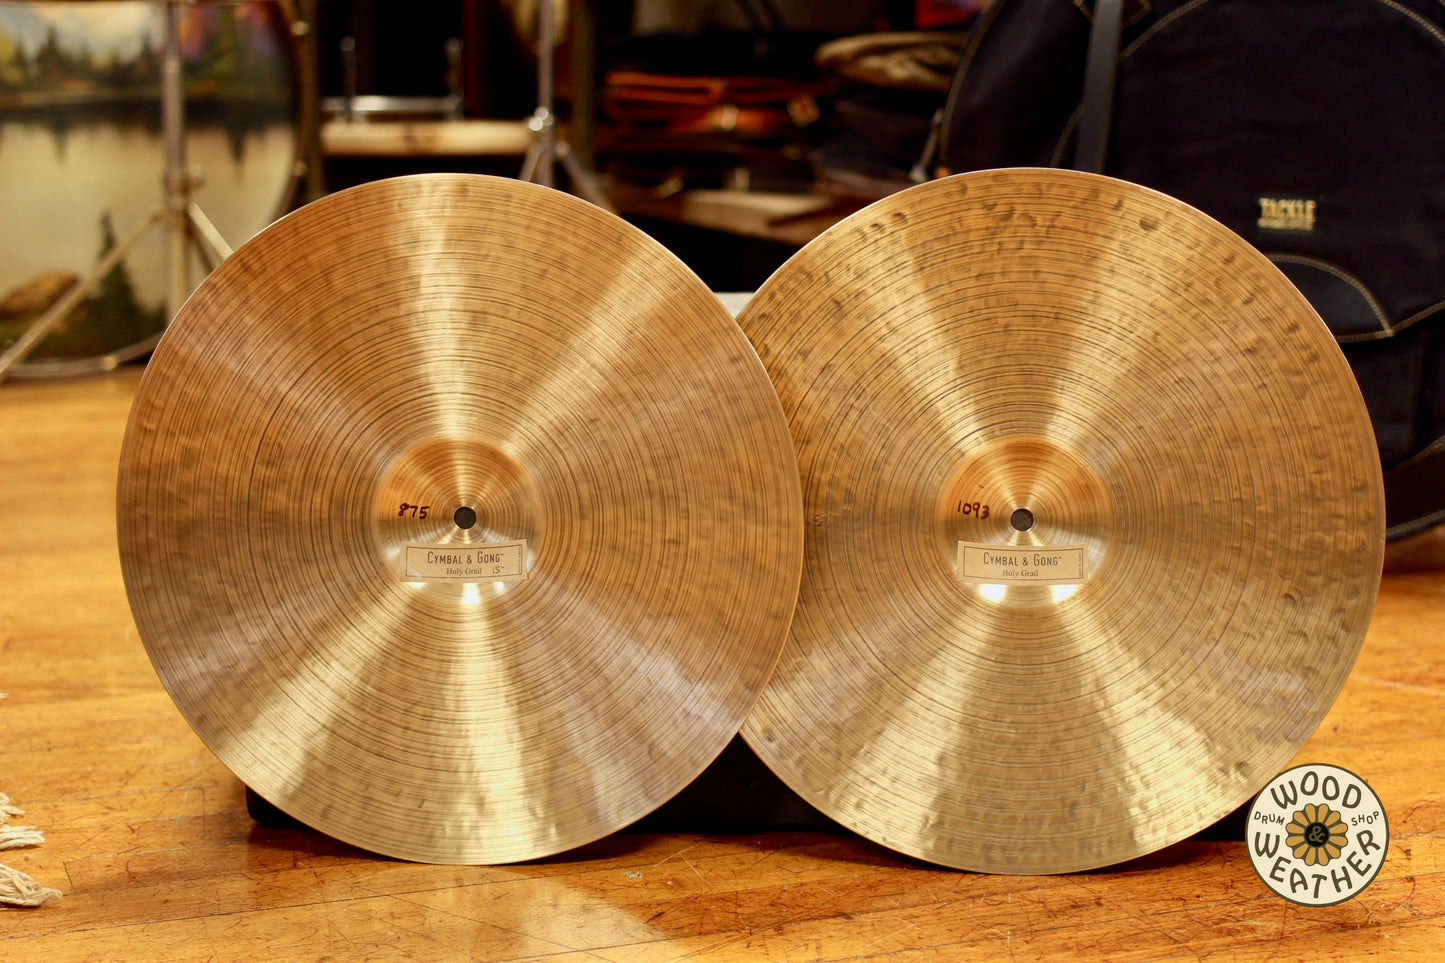 Cymbal & Gong 15" Holy Grail Hi-Hat Cymbals 875/1093g